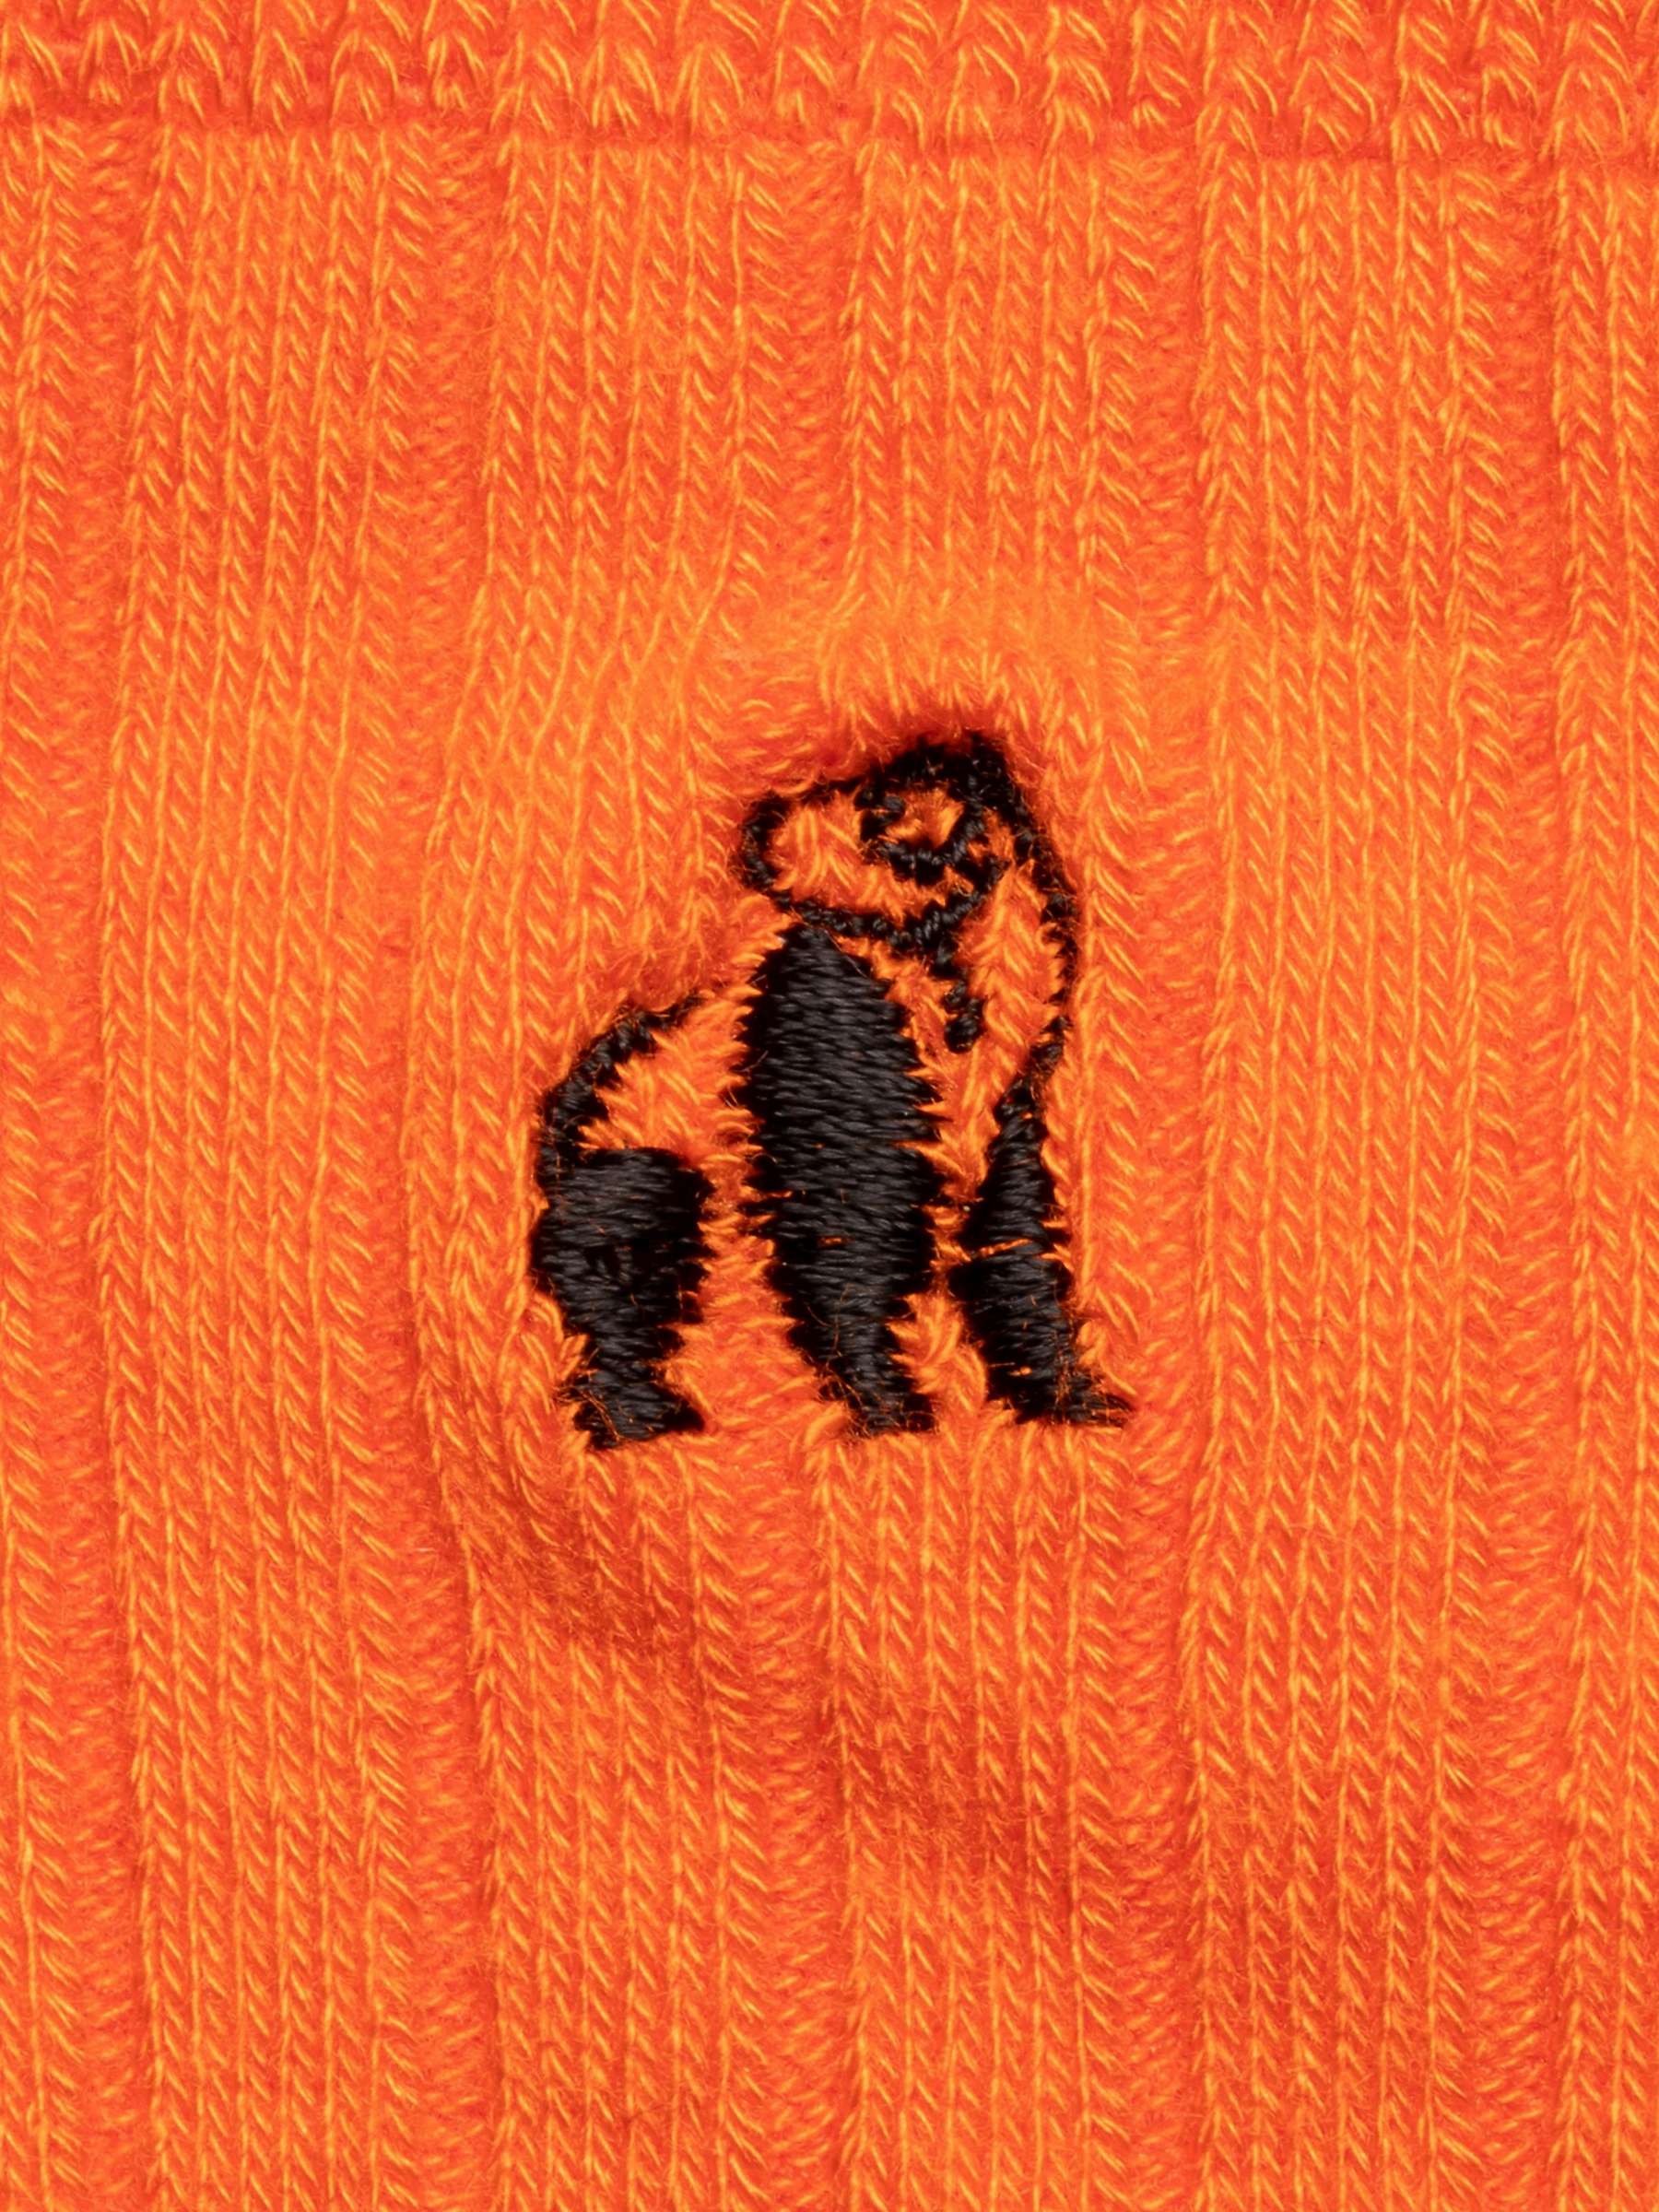 Buy Swole Panda Pattern Bamboo Socks, Pack of 4, Orange/Blue/Multi Online at johnlewis.com